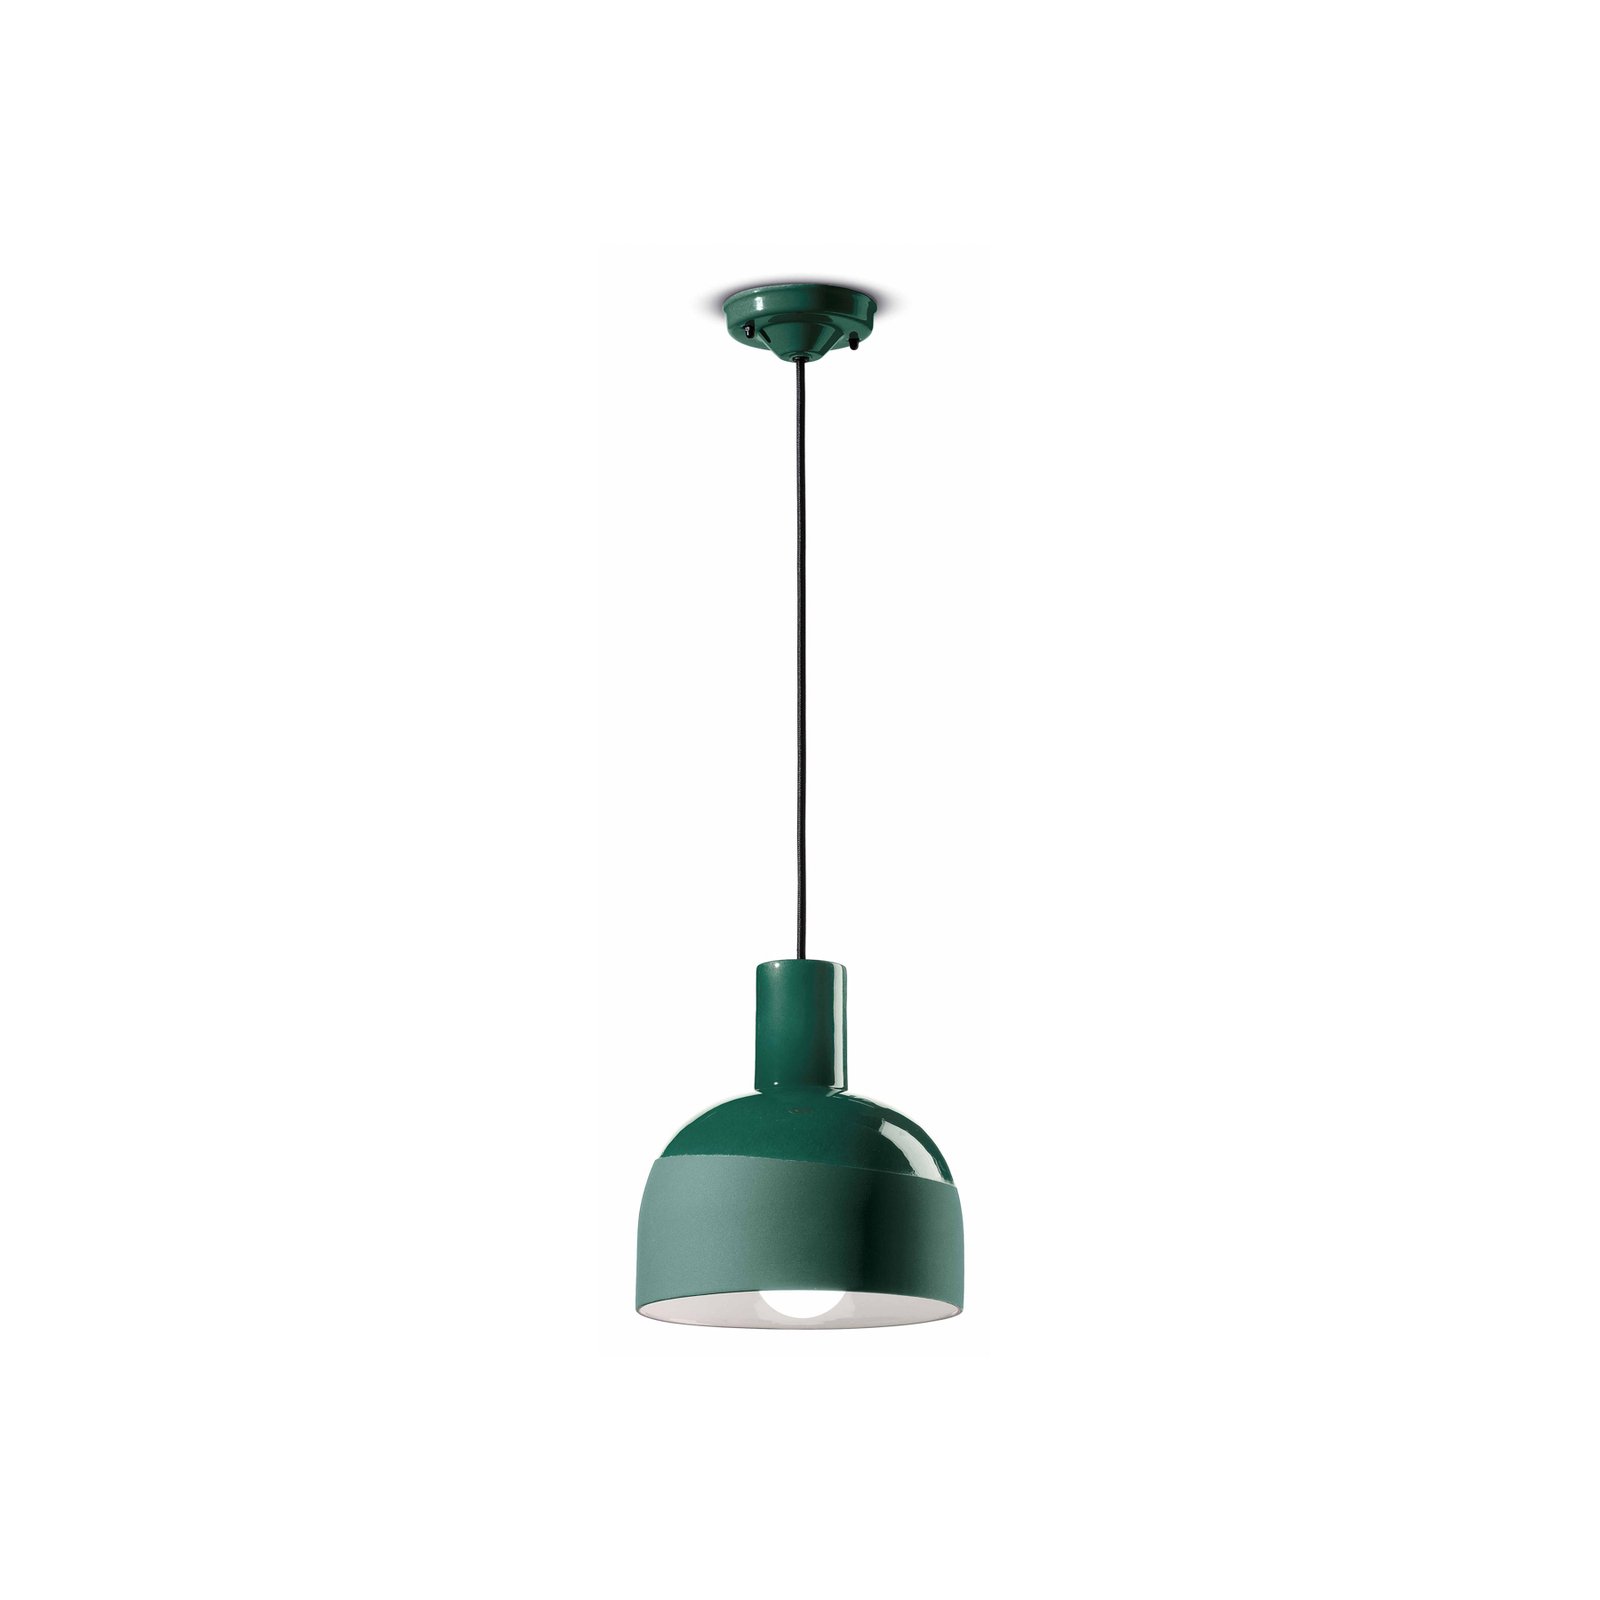 Caxixi viseća svjetiljka od keramike, zelena